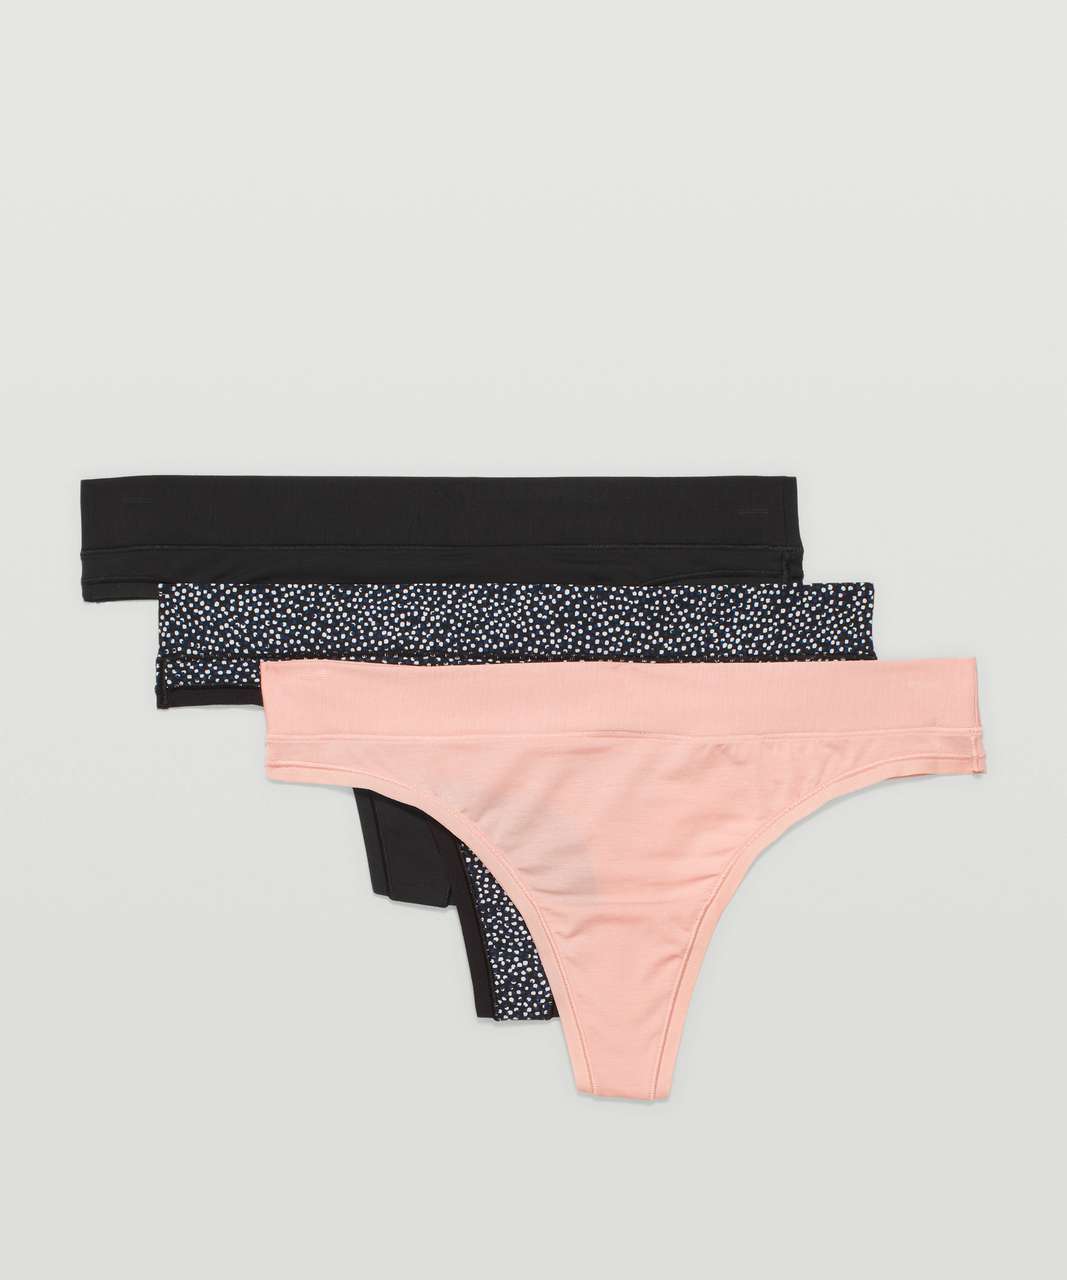 Lululemon UnderEase Mid Rise Thong Underwear 3 Pack - Black / Pink Mist / Double Dimension Starlight Black